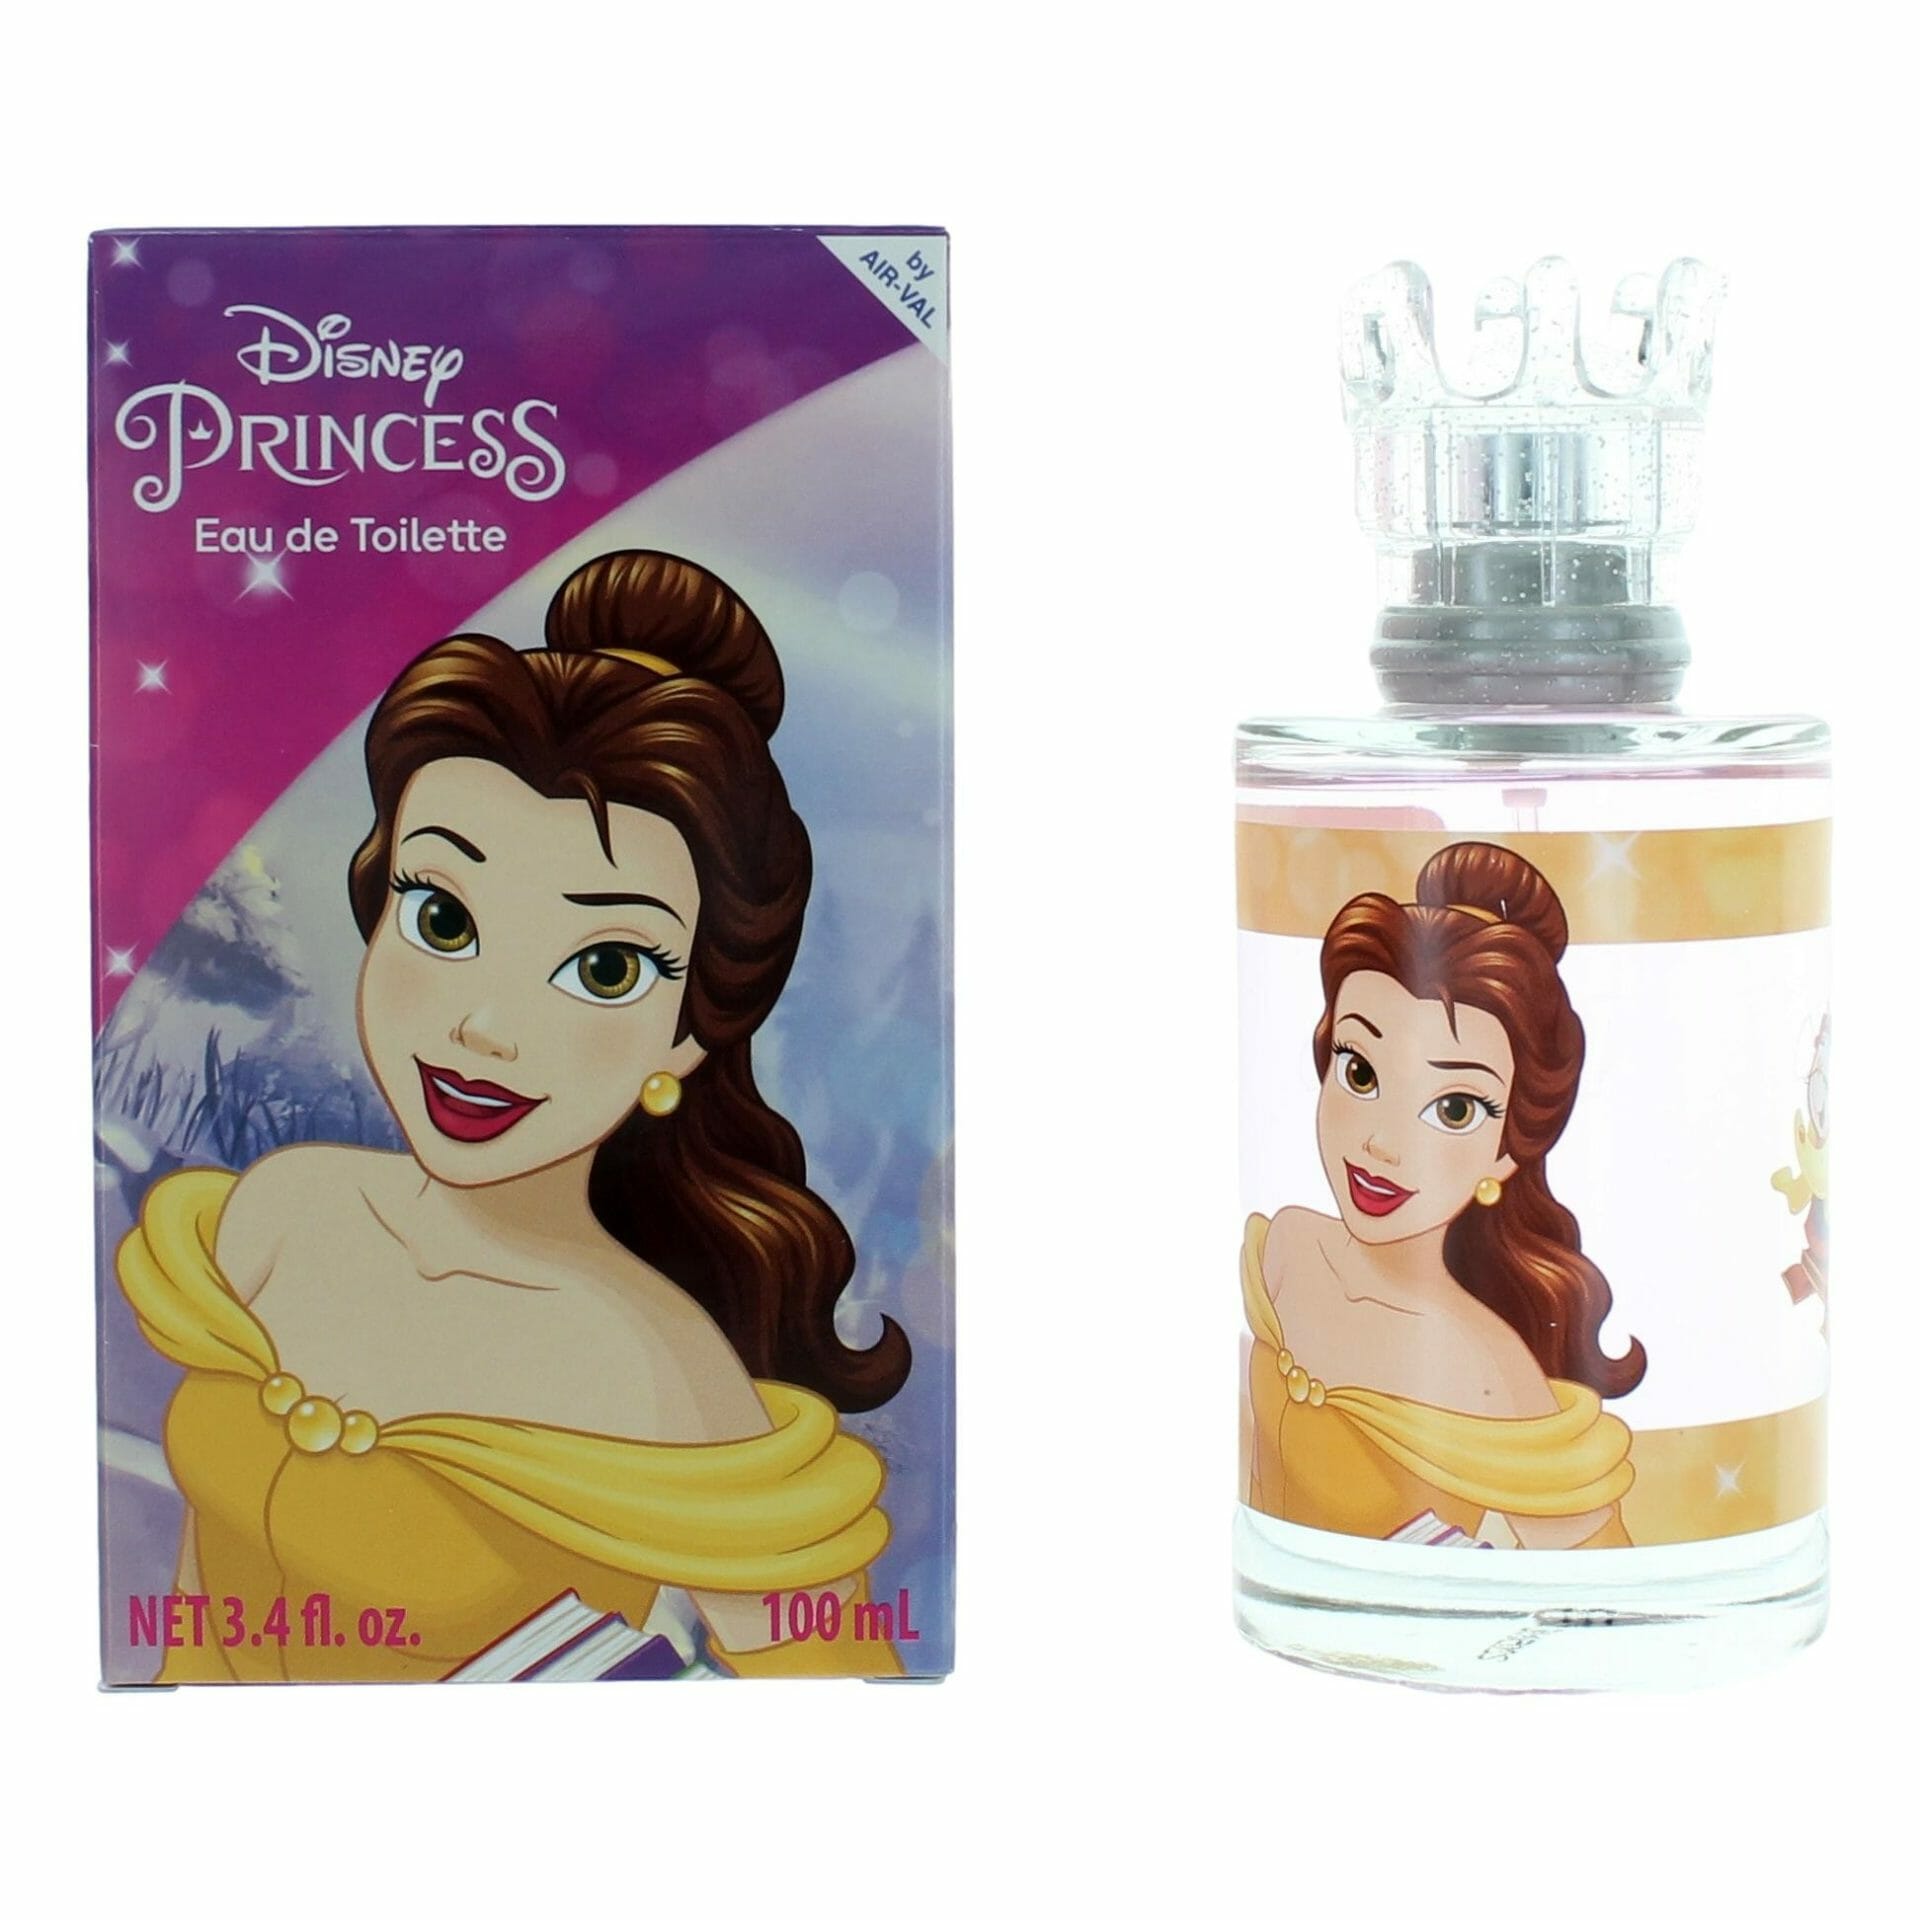 Disney Beauty and The Beast for Kids Gift Set Eau de Toilette